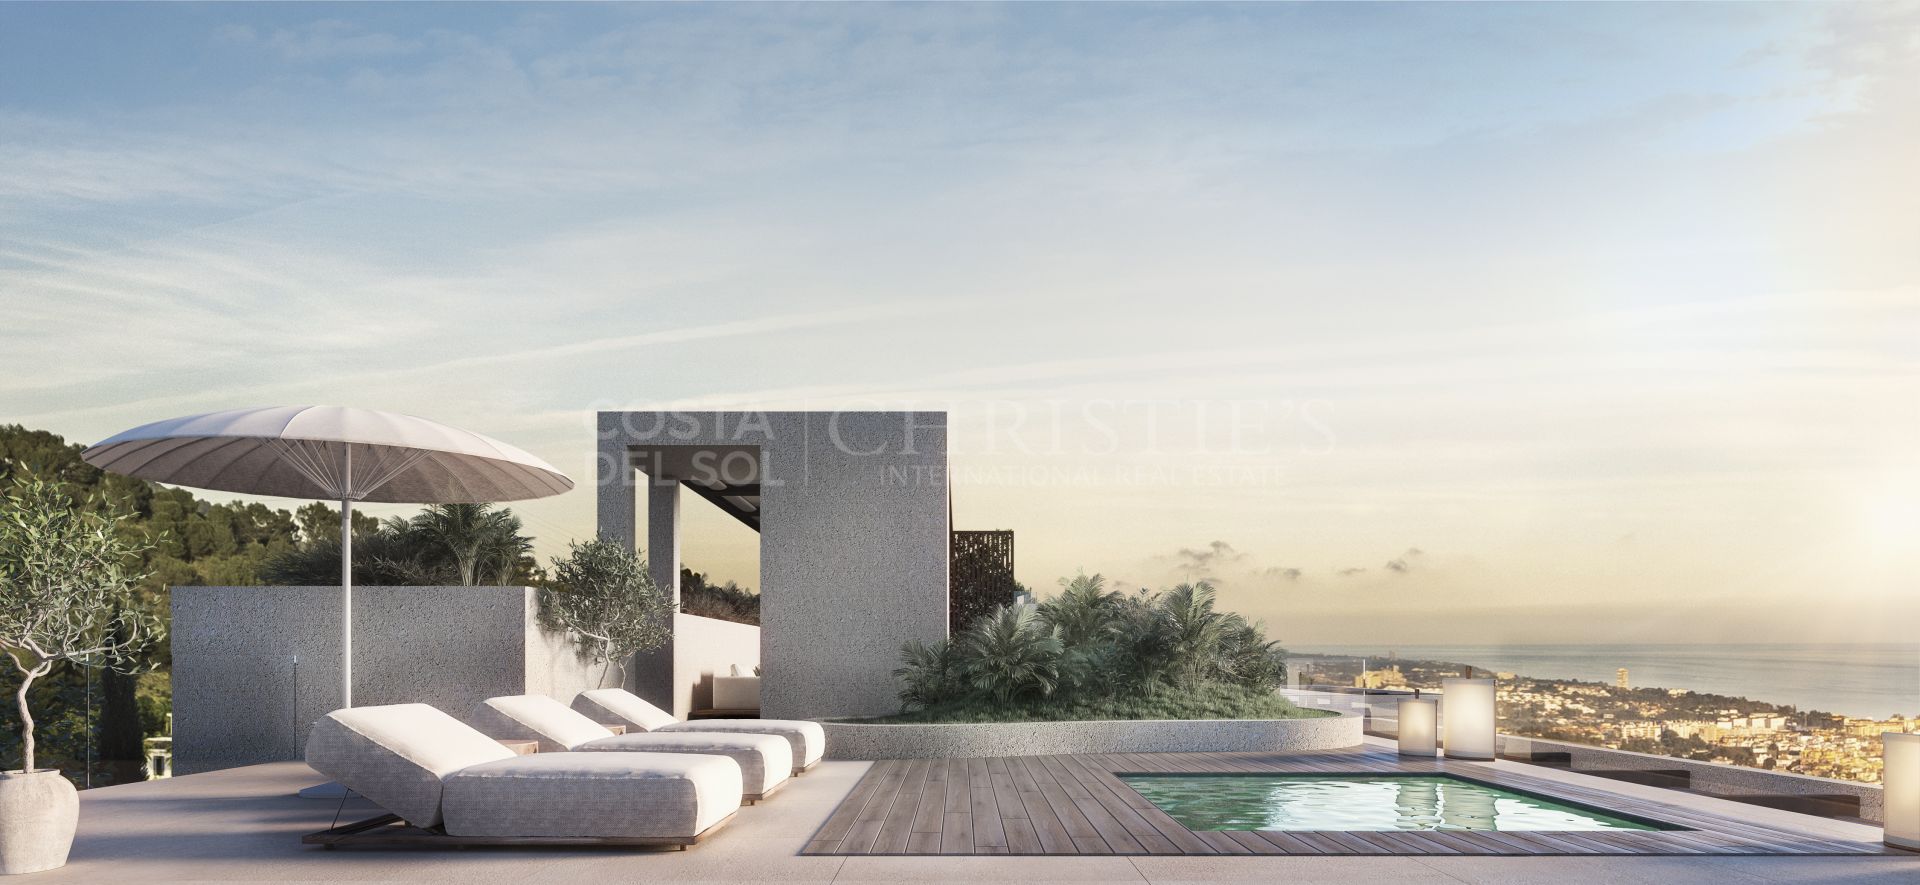 Ultra-luxury villas in Cascada de Camoján, Cascada de Camojan, Milla de Oro de Marbella - Villas de ultralujo en Cascada de Camoján, Sierra Blanca | Christie’s International Real Estate